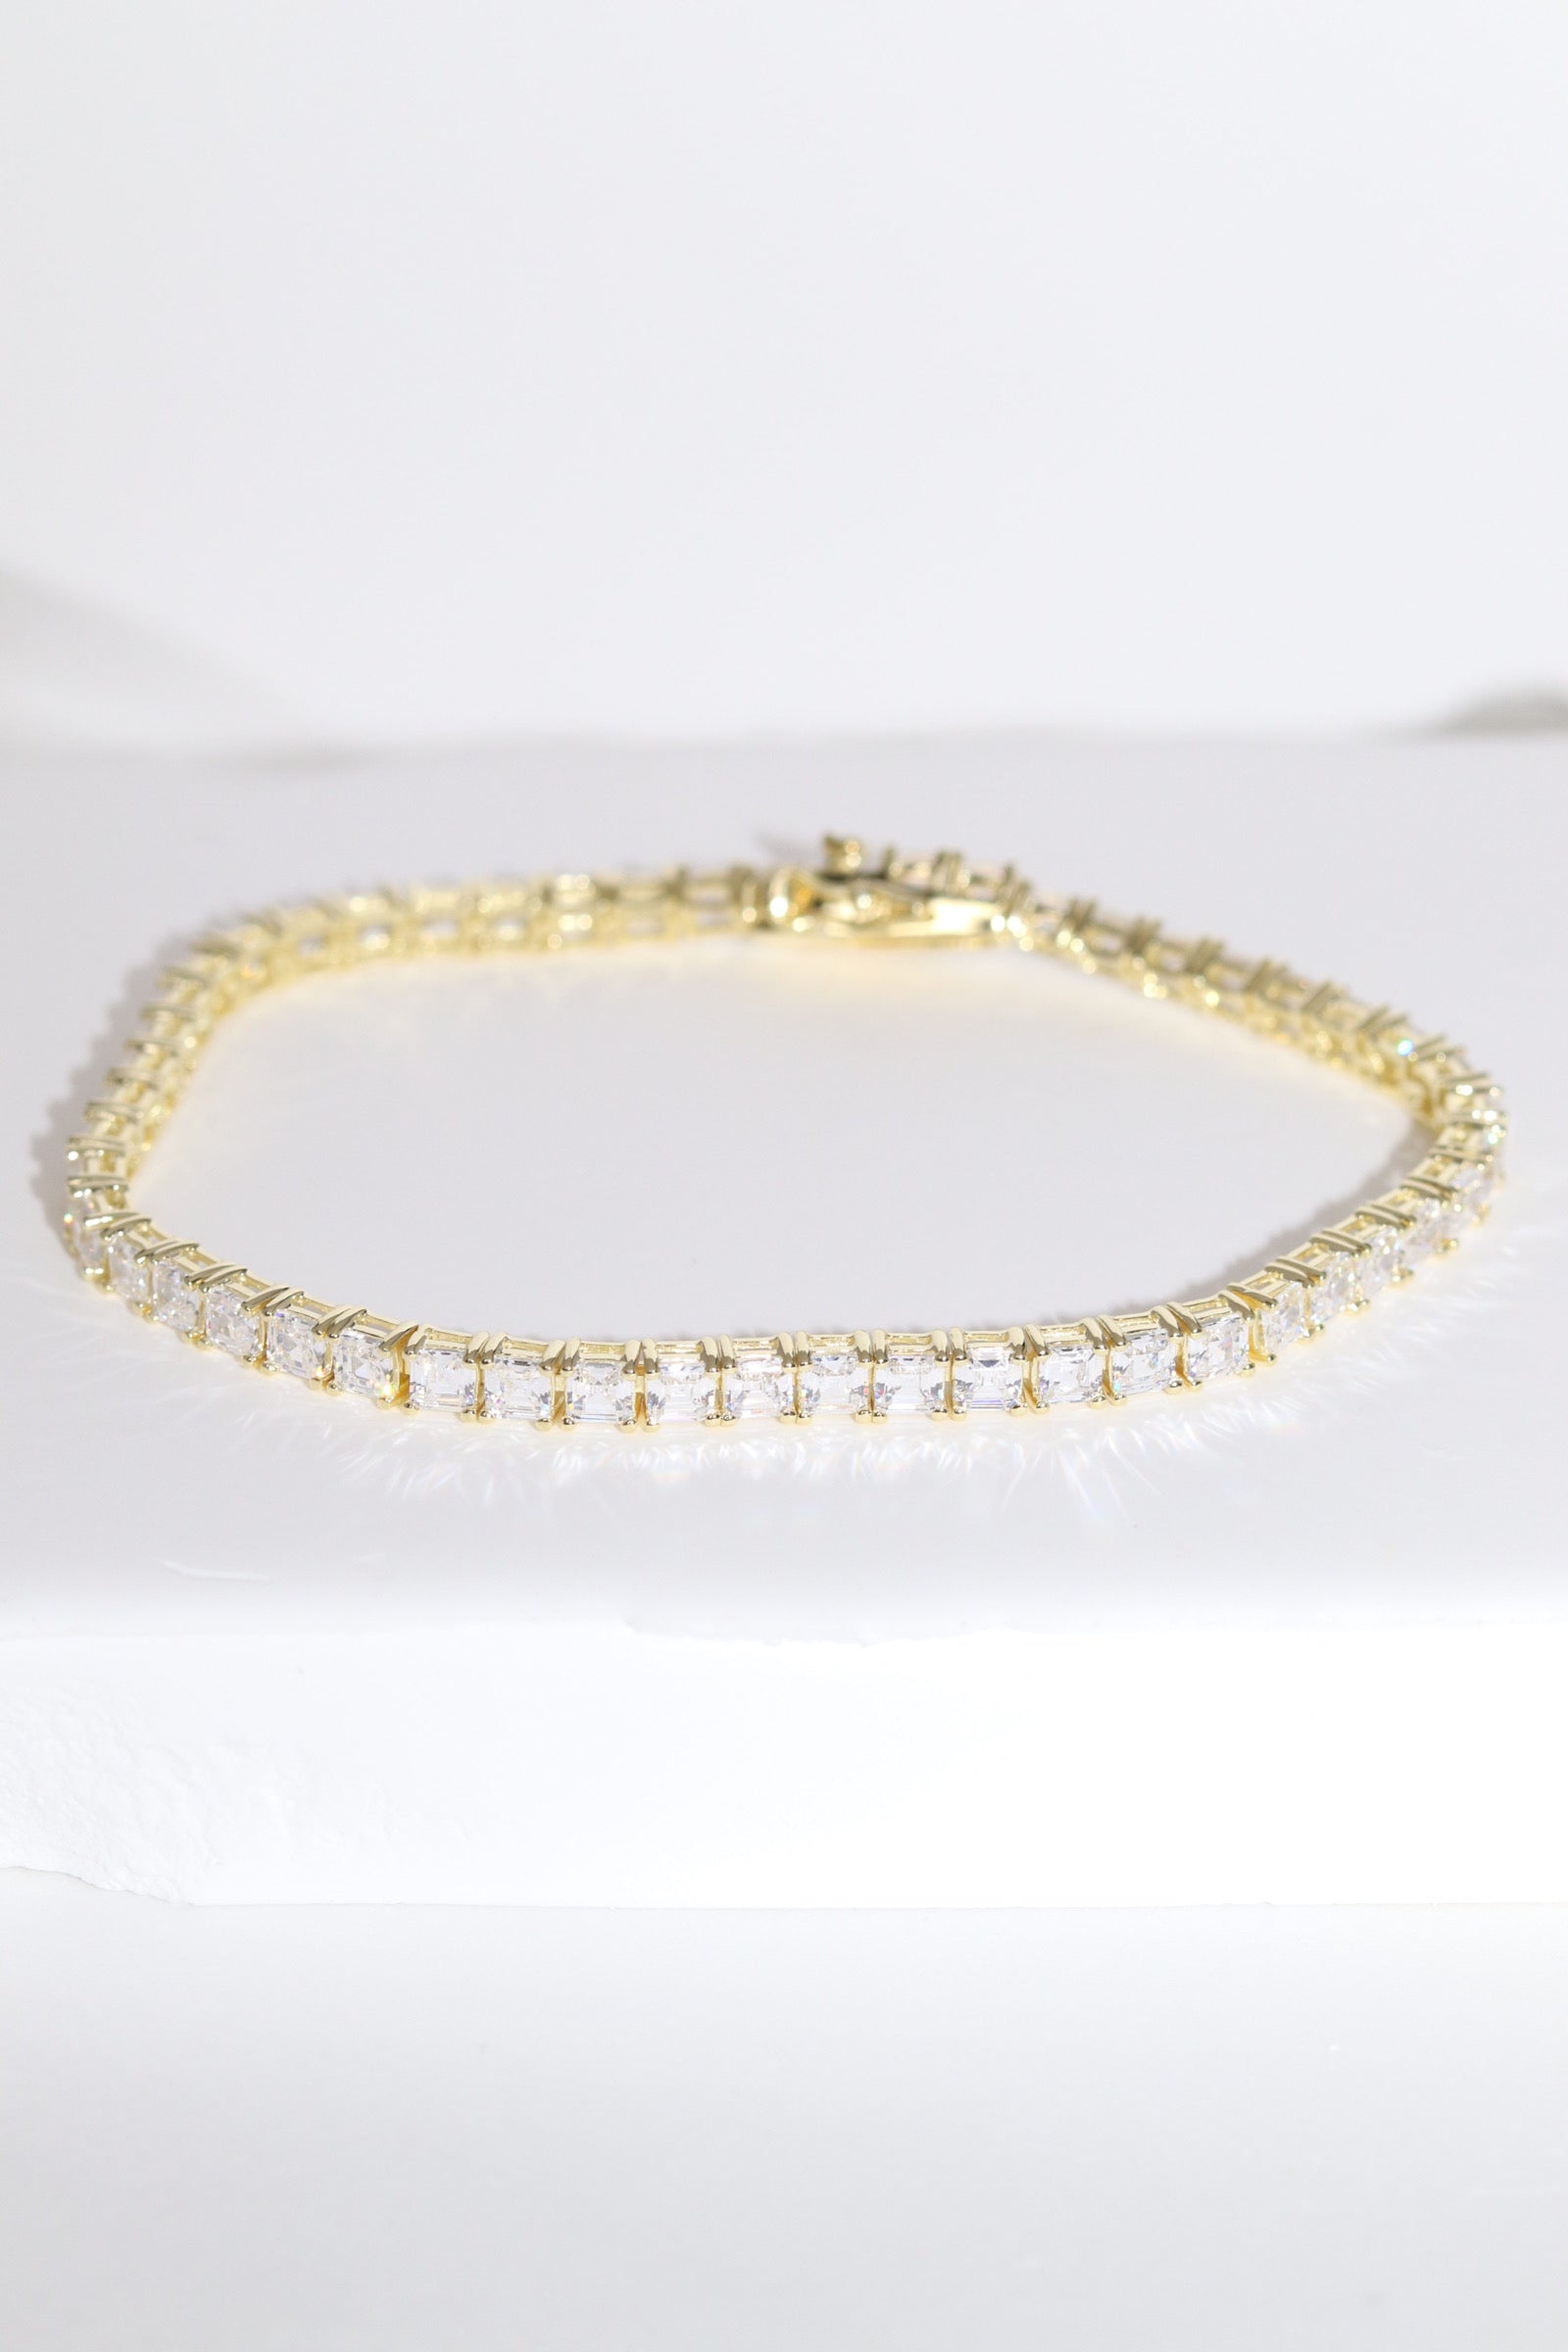 Tenni gold bracelet